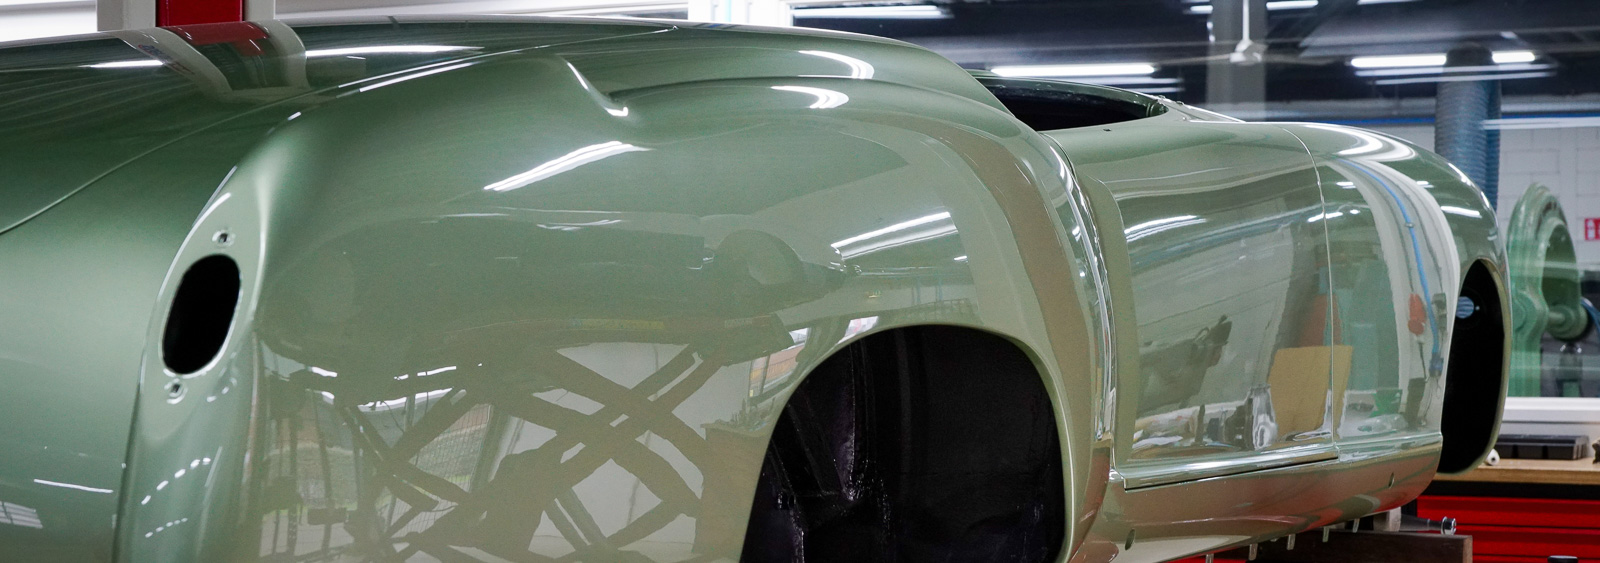 Nash-Healey-Pininfarina-Roadster-Restoration-15.jpg